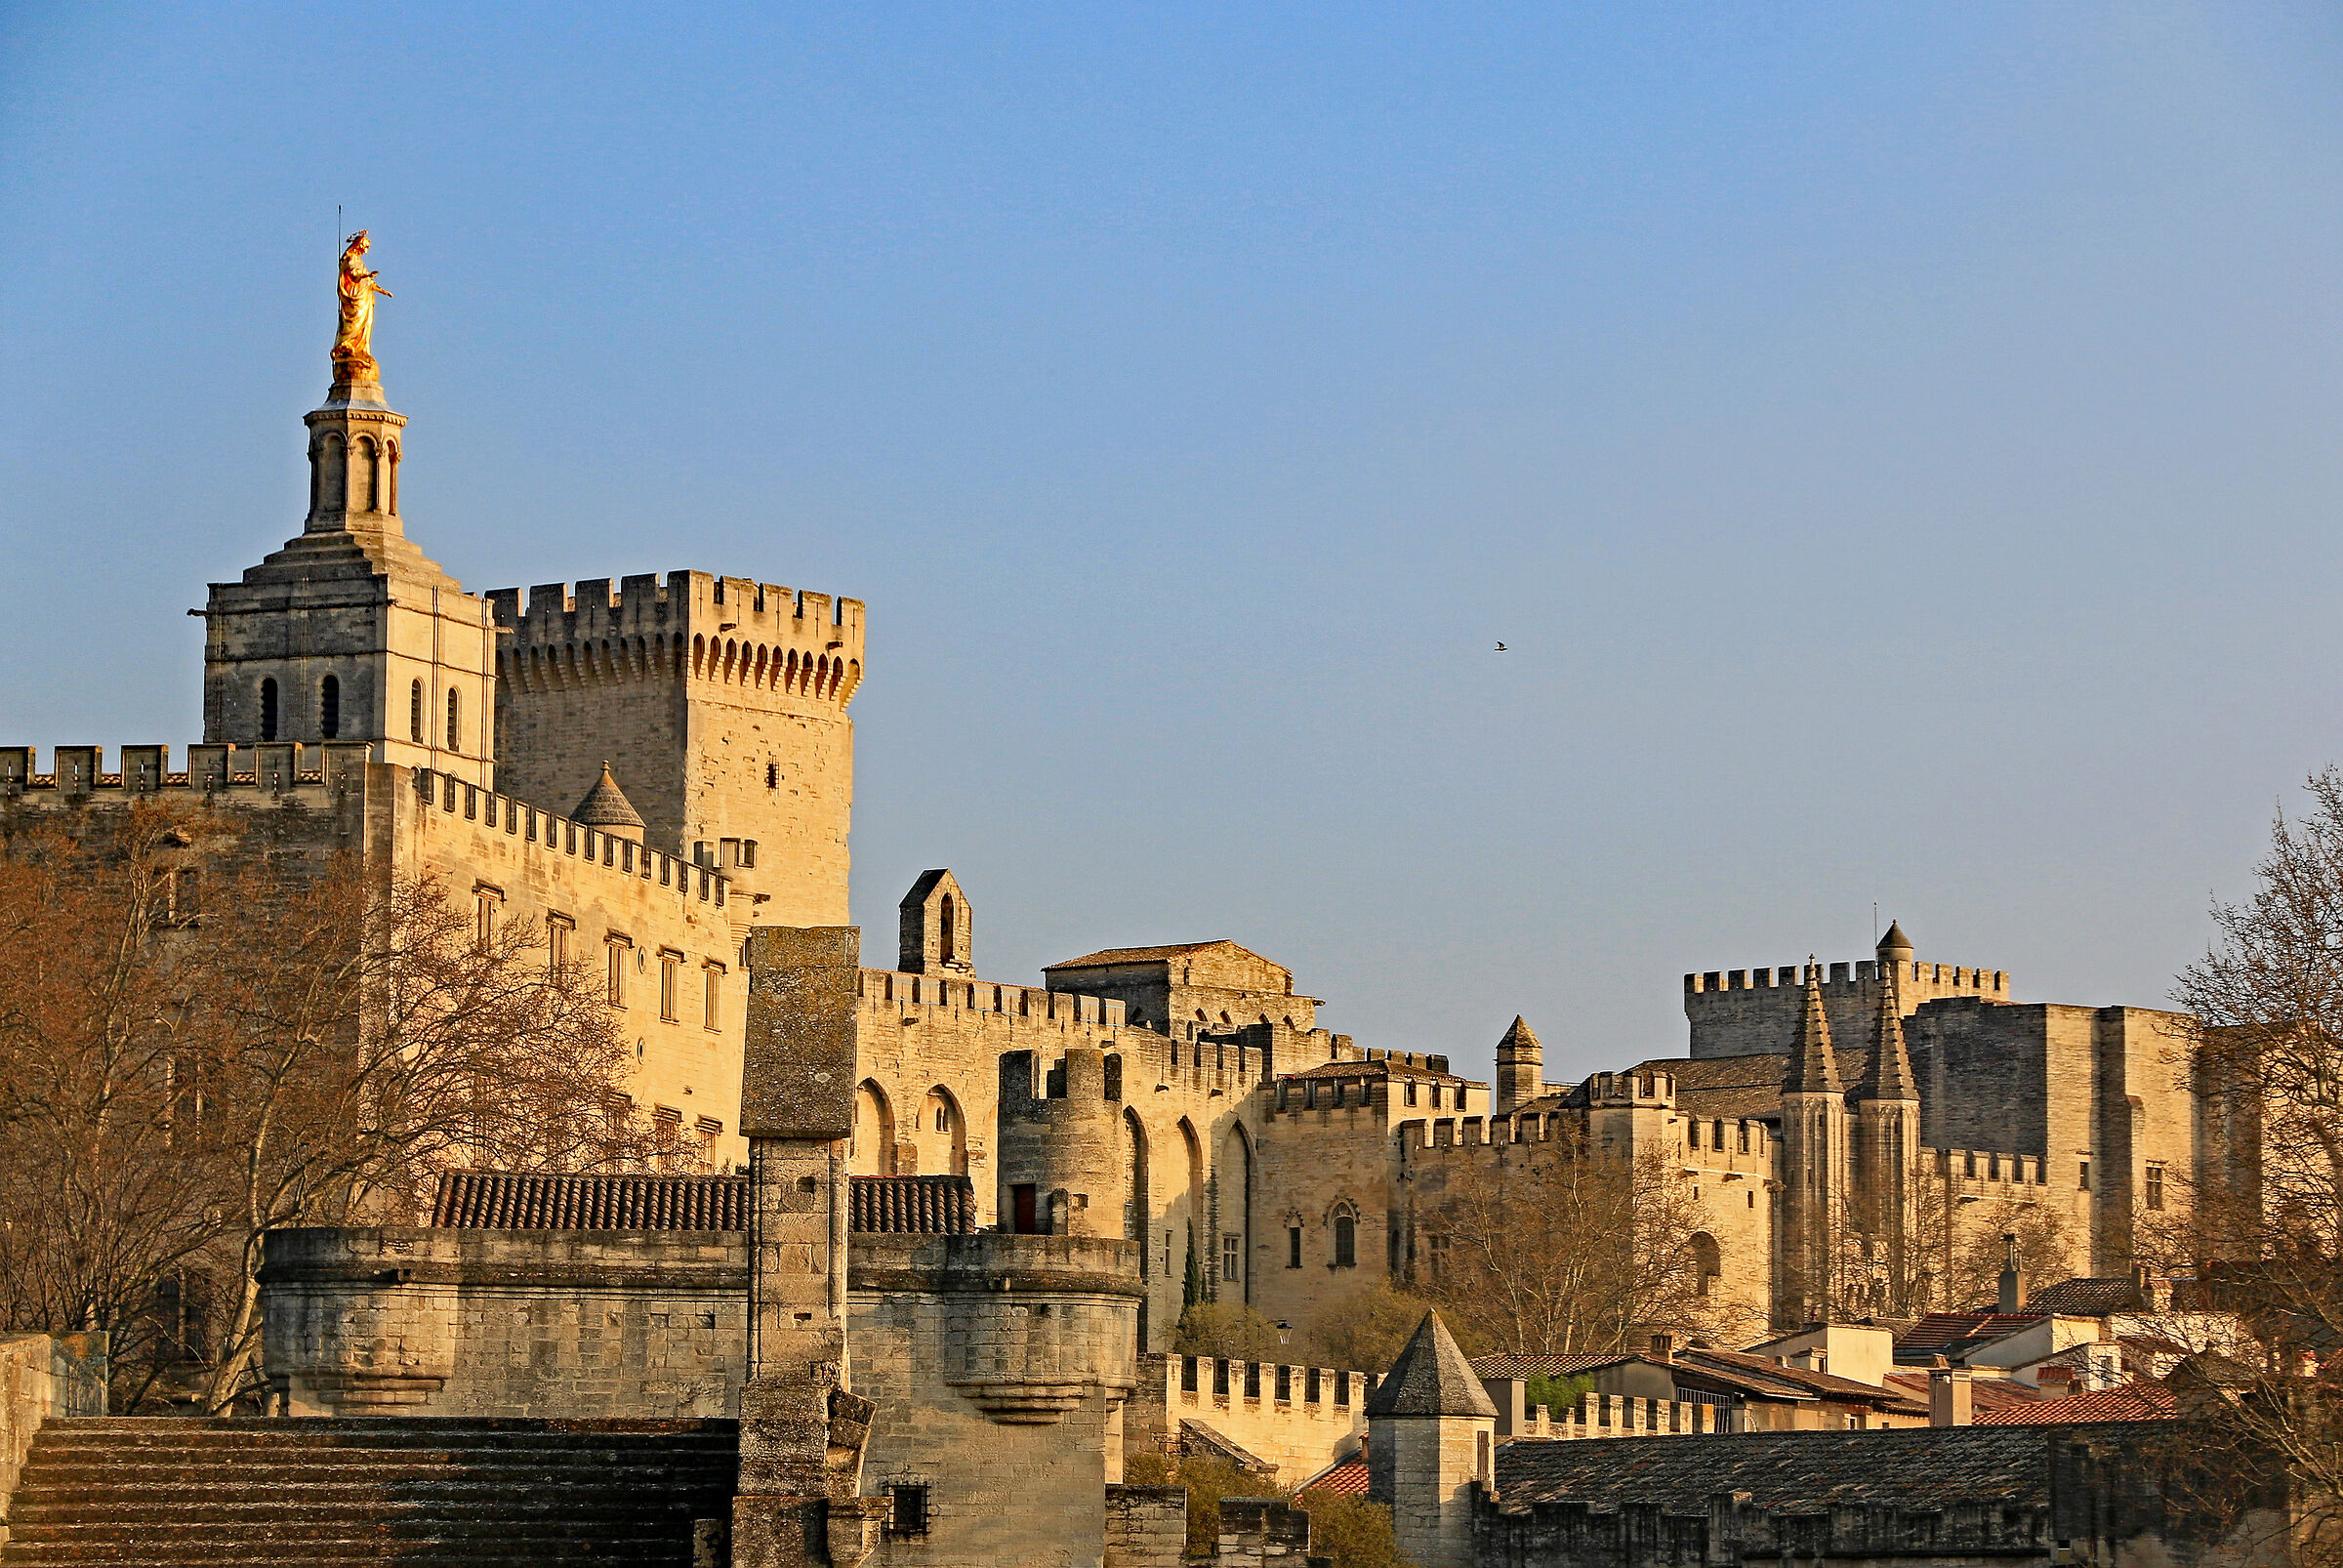 Avignon: Papal Palace seen from the "broken bridge"...